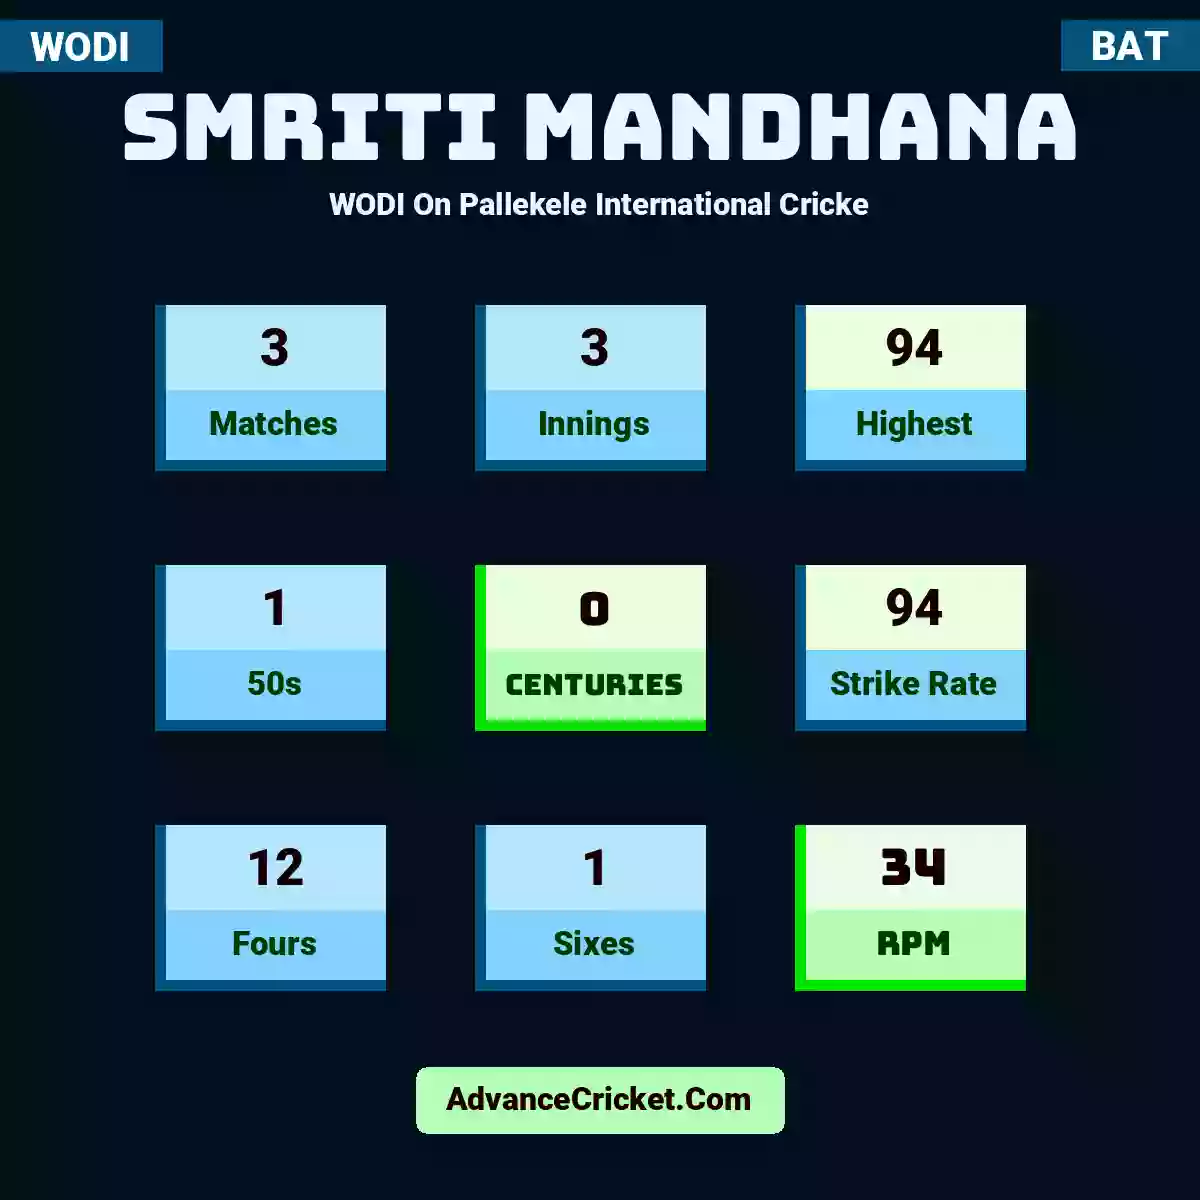 Smriti Mandhana WODI  On Pallekele International Cricke, Smriti Mandhana played 3 matches, scored 94 runs as highest, 1 half-centuries, and 0 centuries, with a strike rate of 94. S.Mandhana hit 12 fours and 1 sixes, with an RPM of 34.